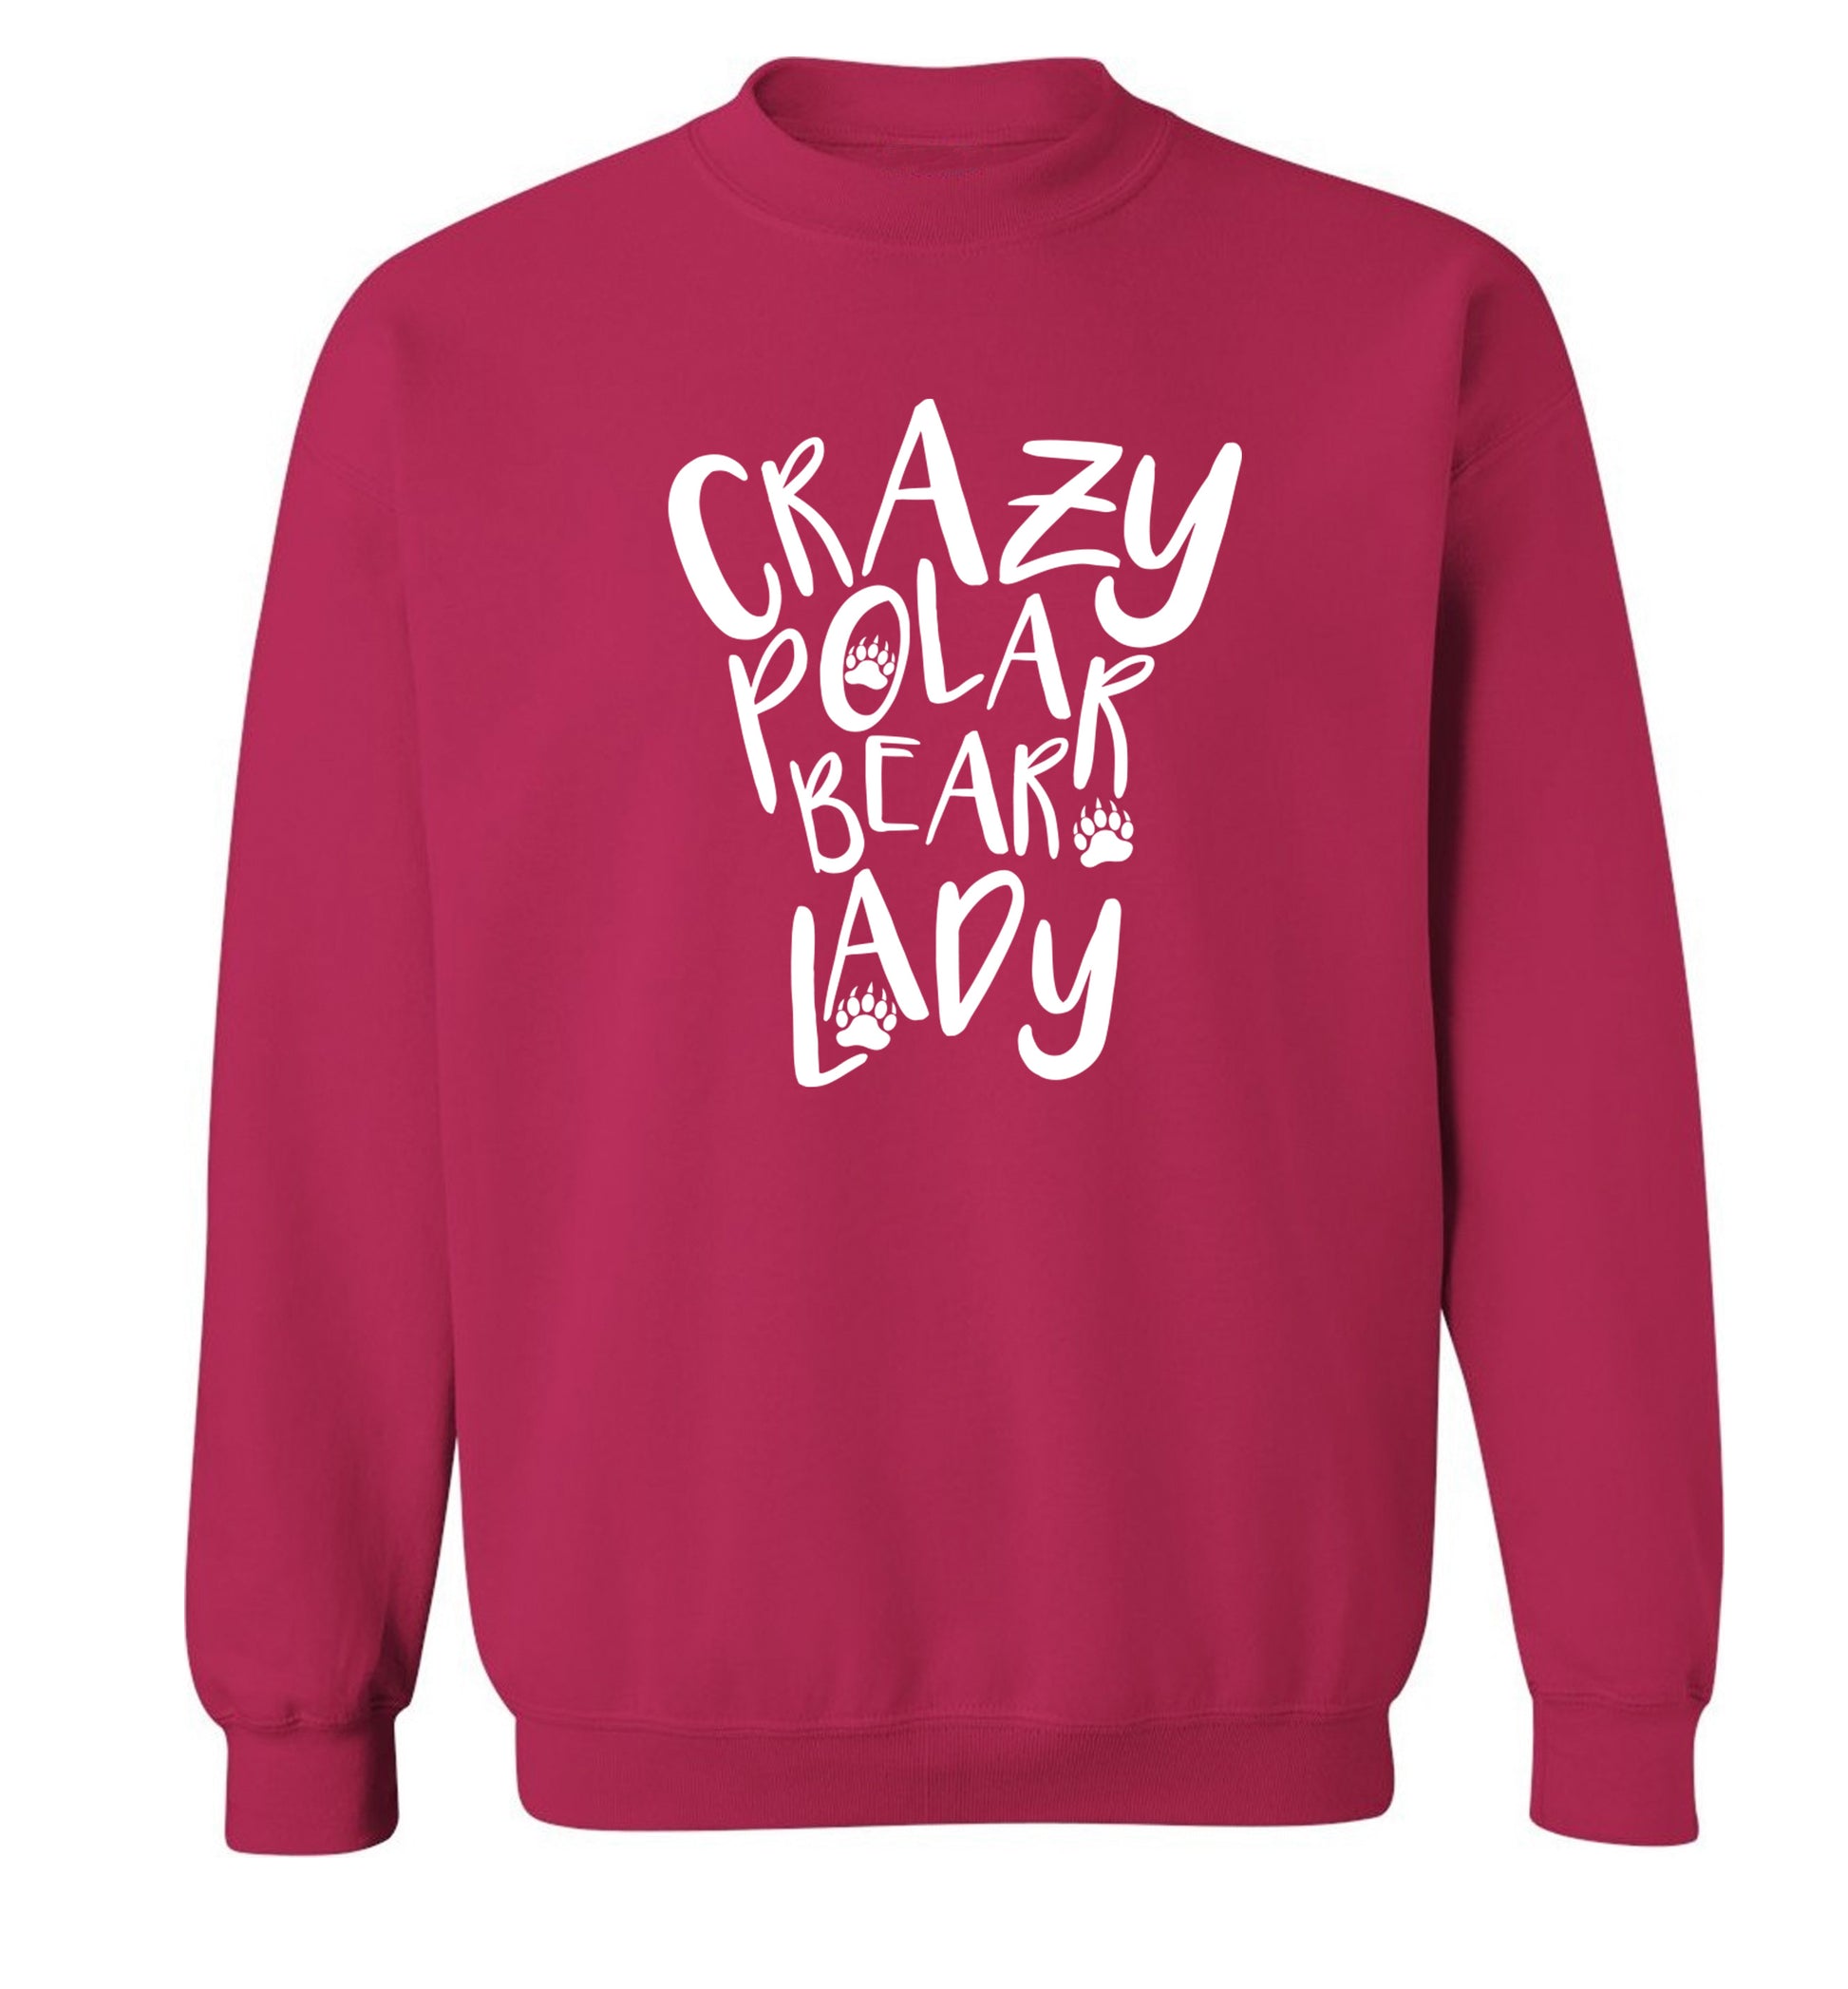 Crazy polar bear lady Adult's unisex pink Sweater 2XL